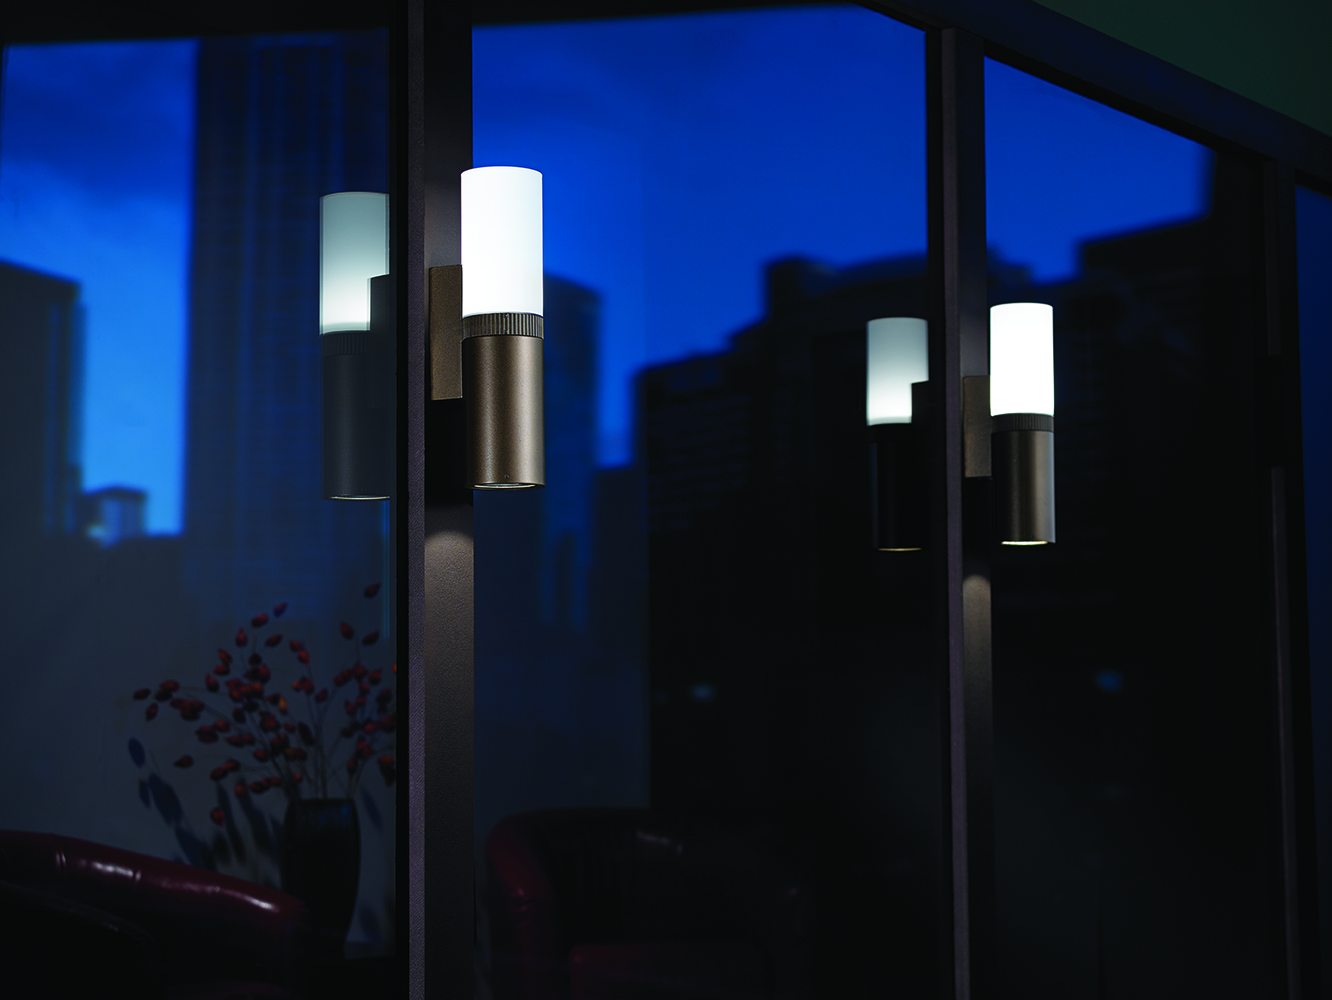 Scope exterior lighting fixtures illuminate large windows at night, reflecting a city skyline.